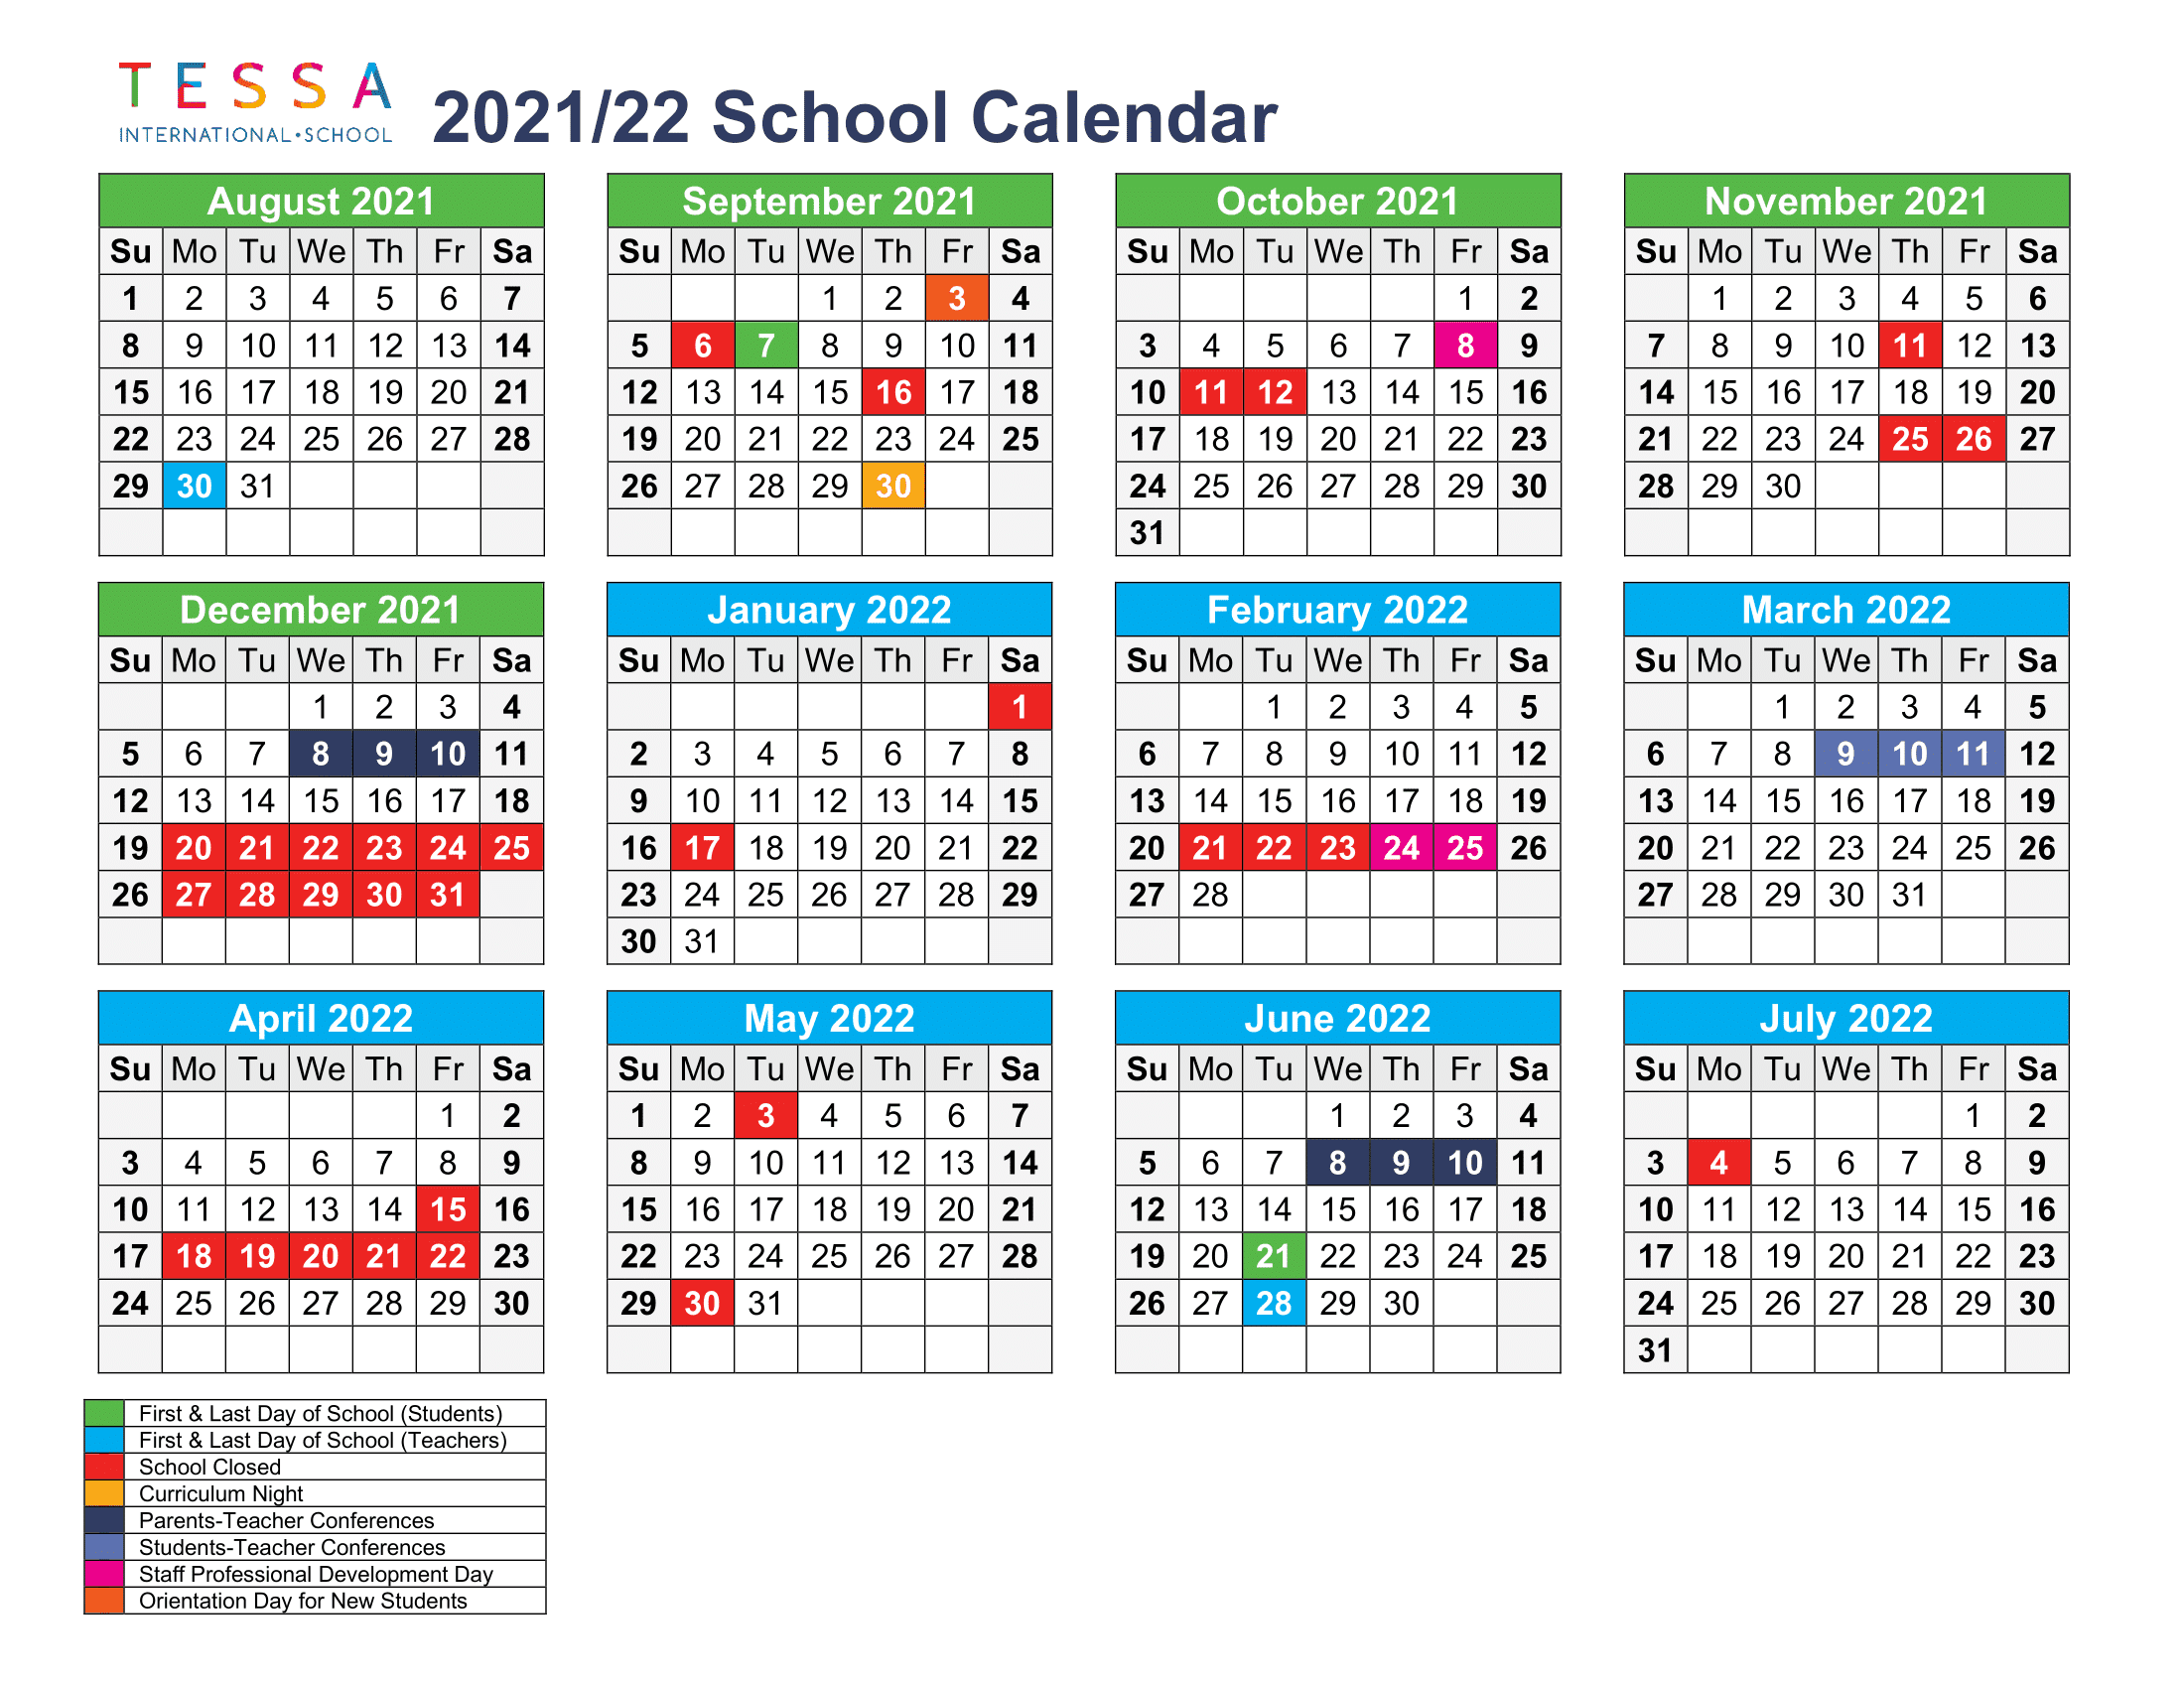 Fordham University Academic Calendar 2022 Academic-Calendar-2021-2022-1 - Tessa International School